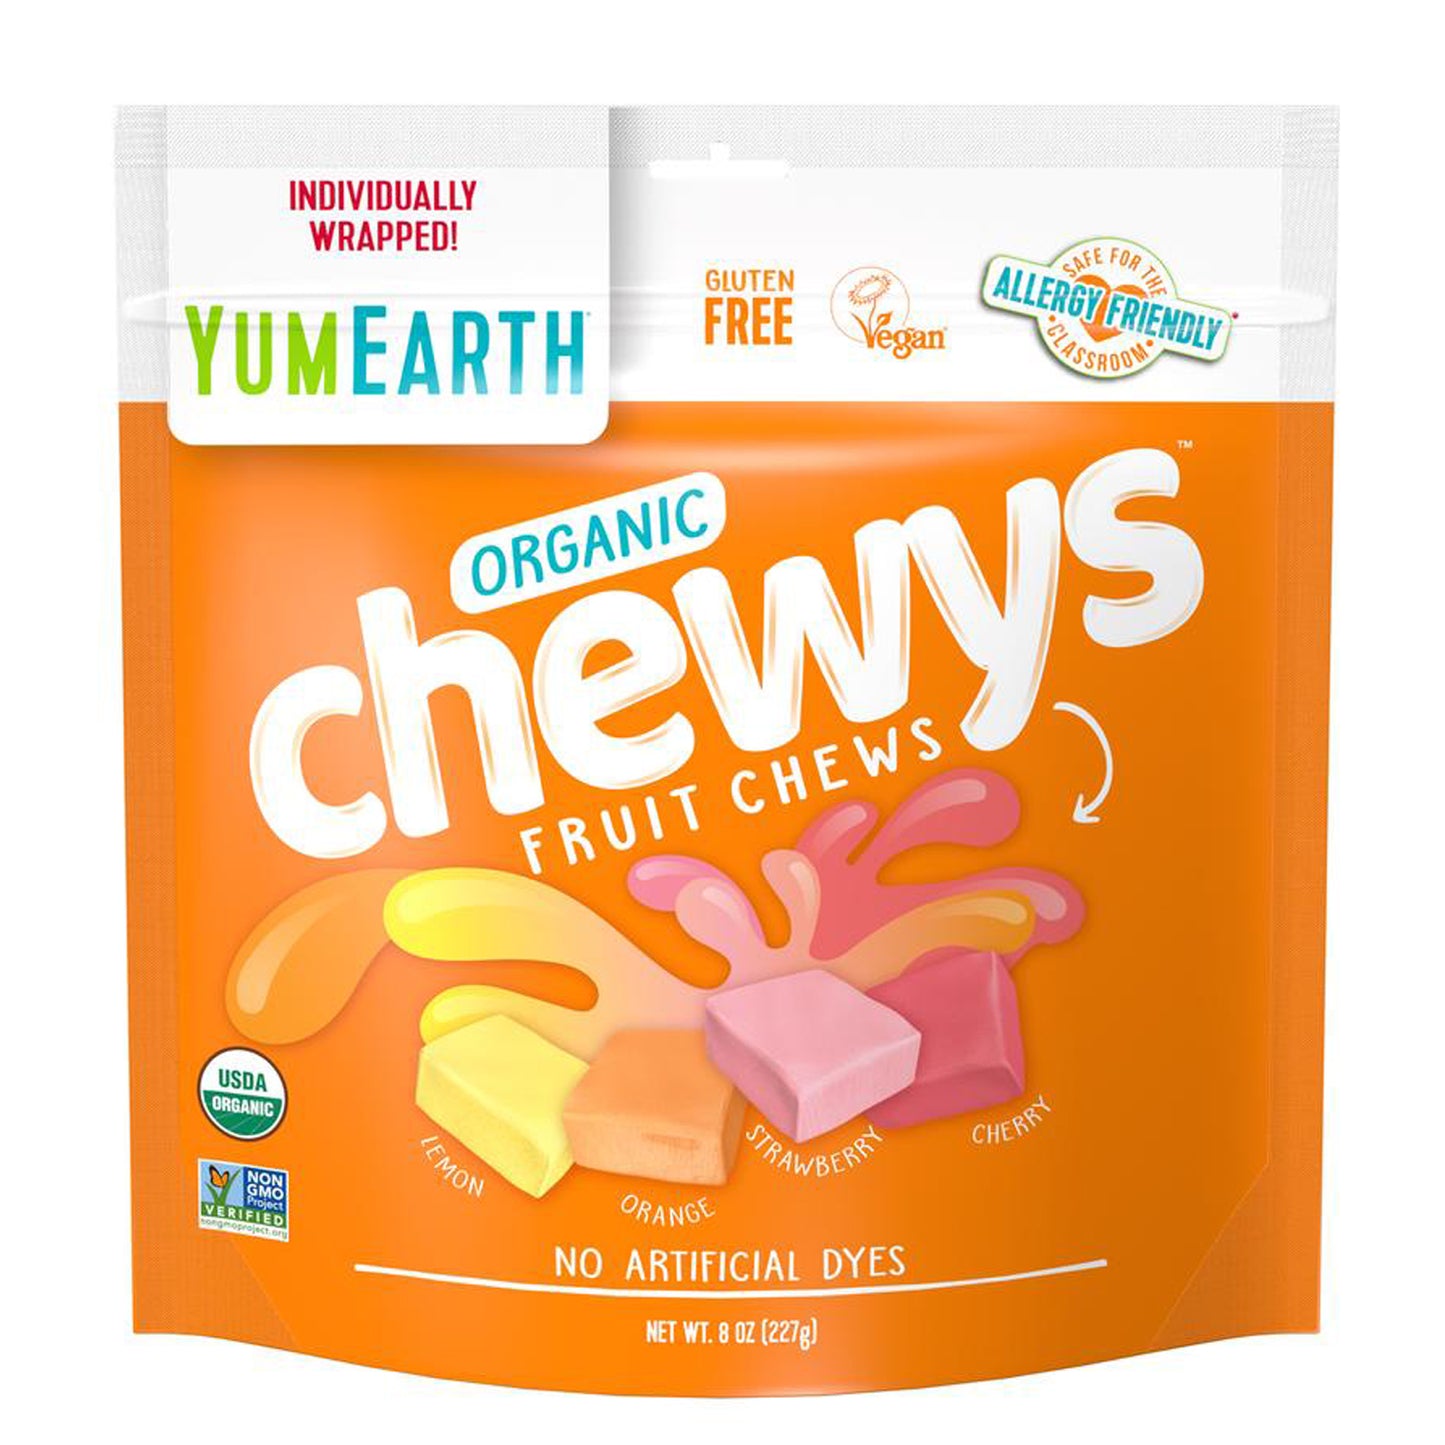 Organic Chewys Fruit Chew